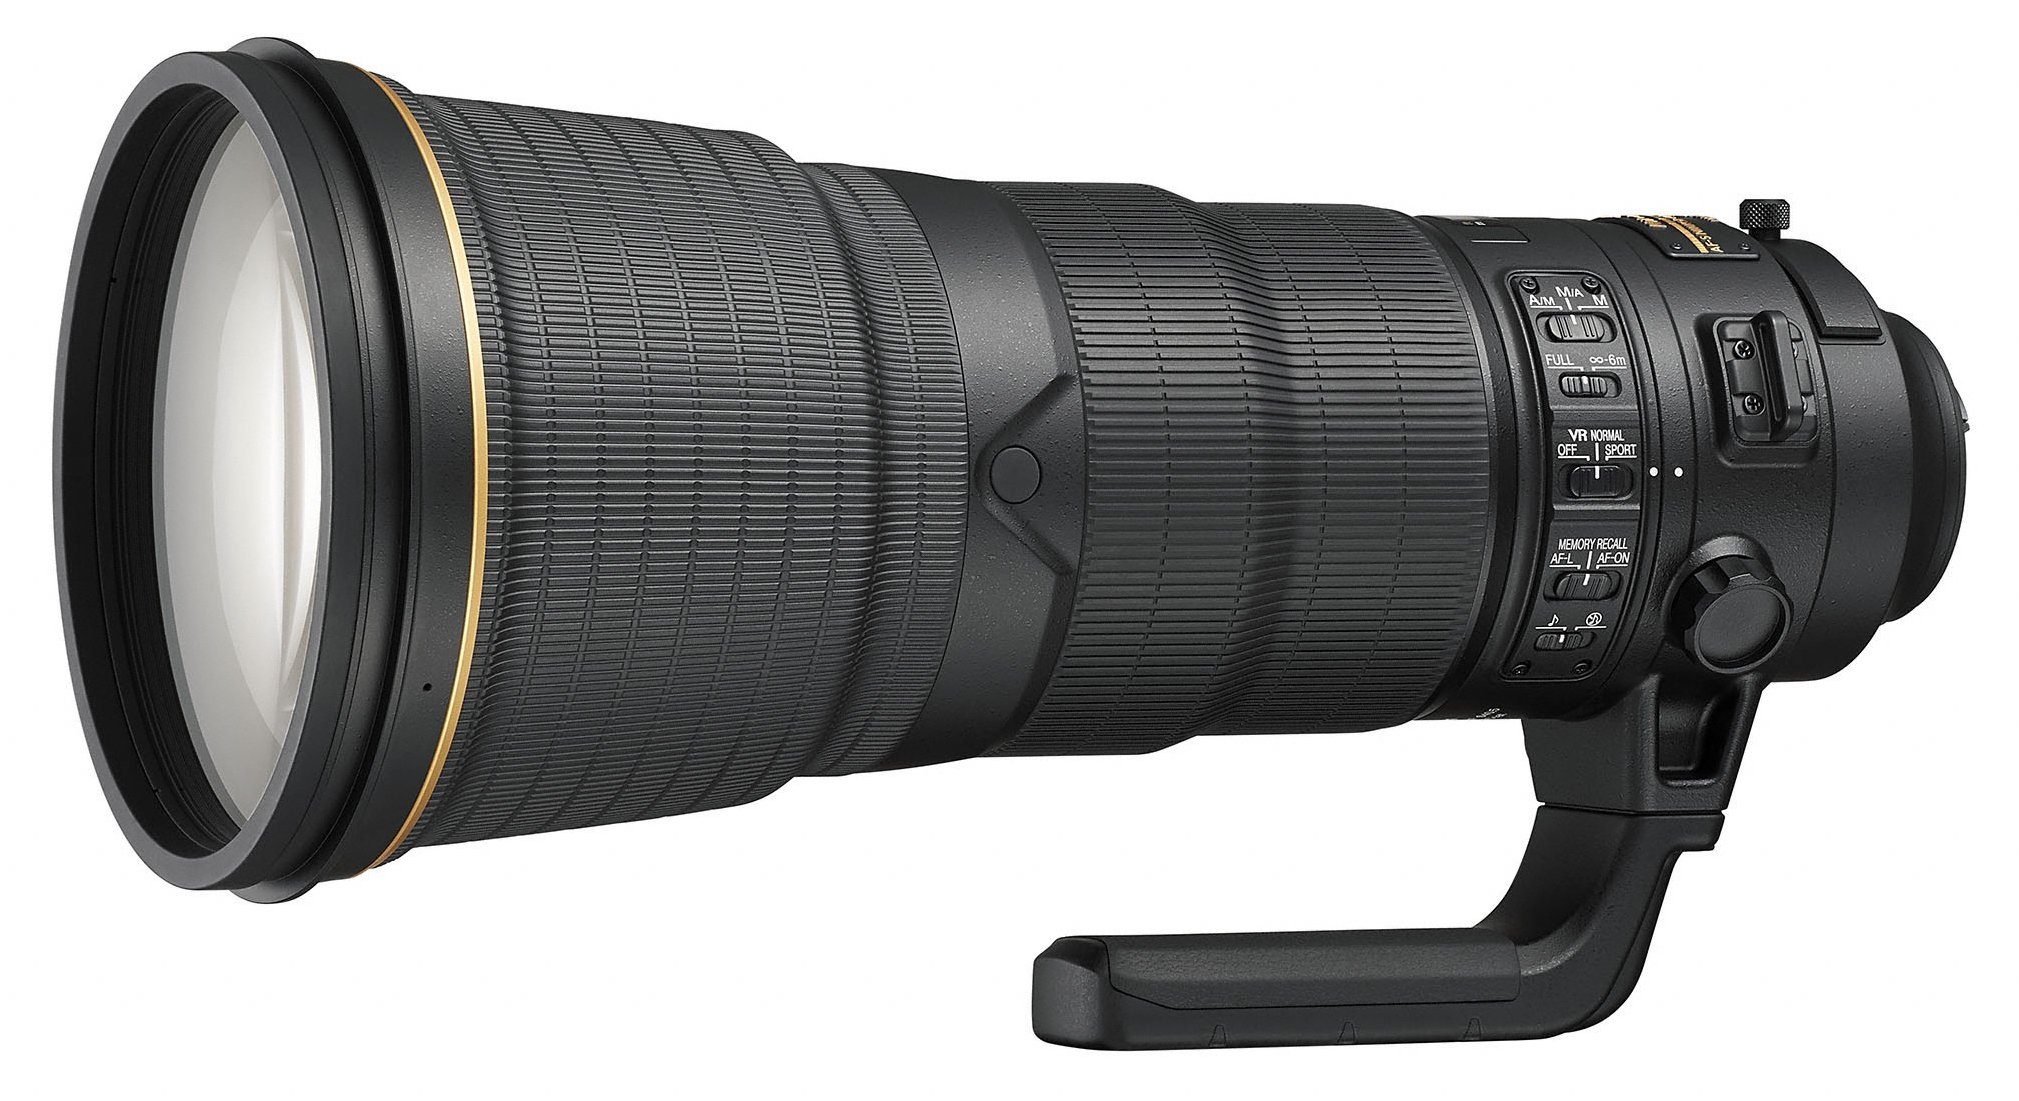 Nikon AFS NIKKOR 400mm f/2.8E FL ED VR Lens